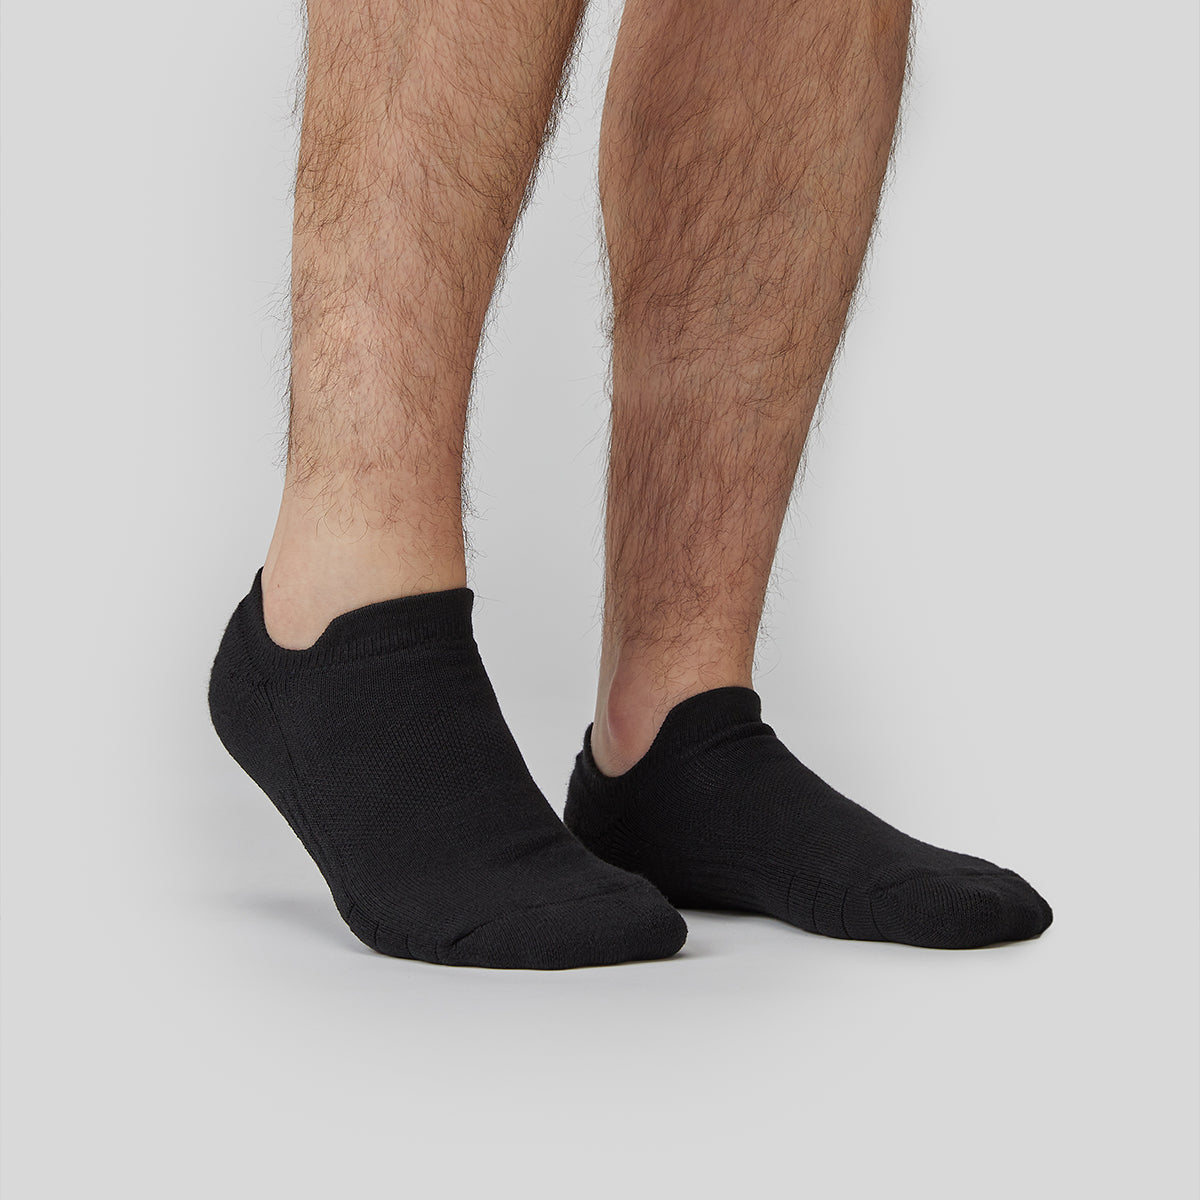 The Low Cut Sock – Manmade